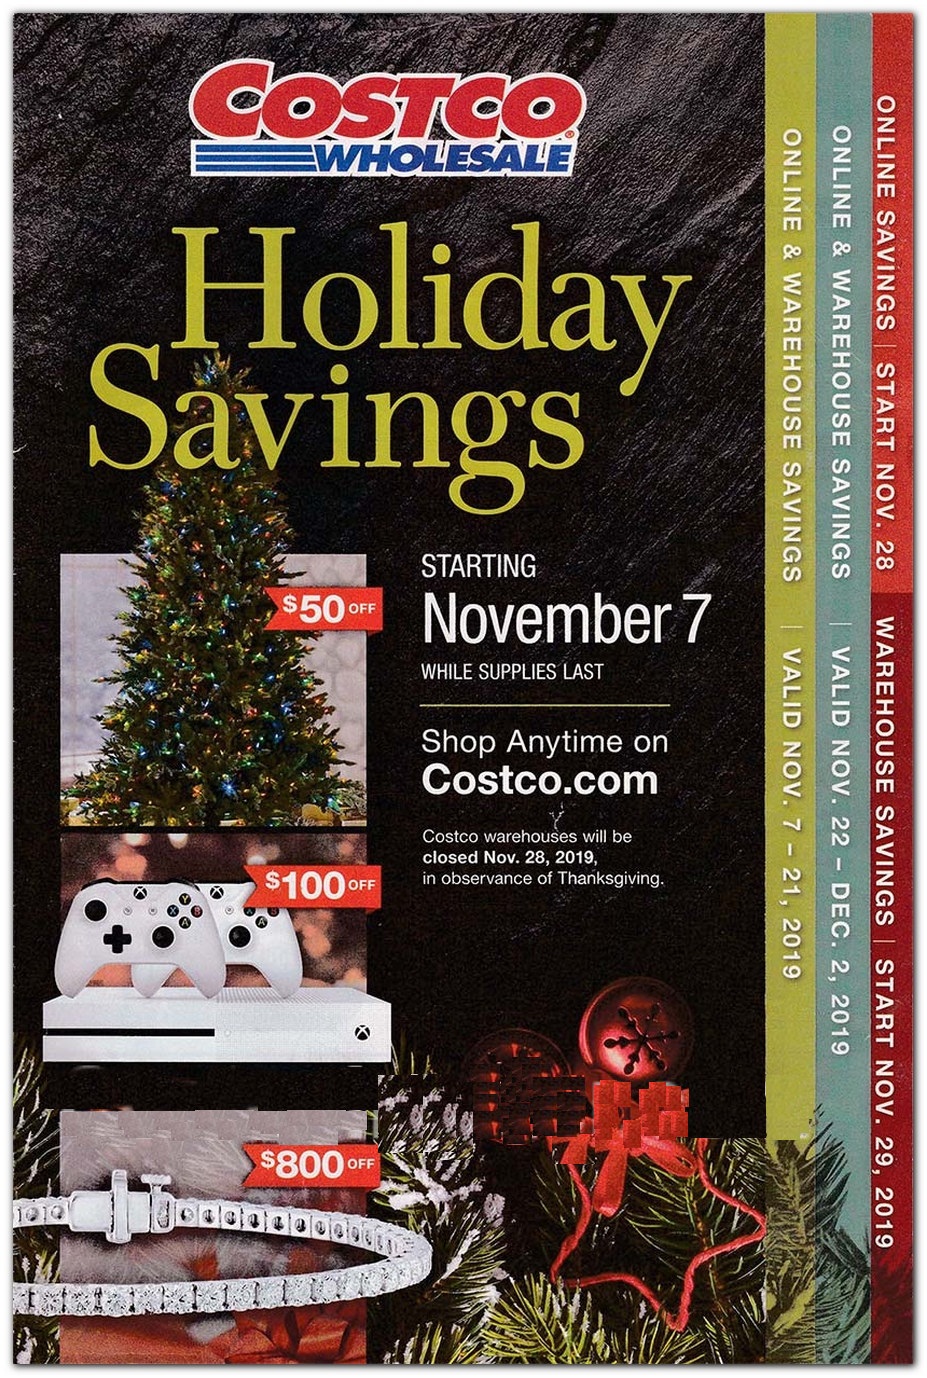 costco christmas gifts 2020 Costco Holiday Catalog 2020 costco christmas gifts 2020